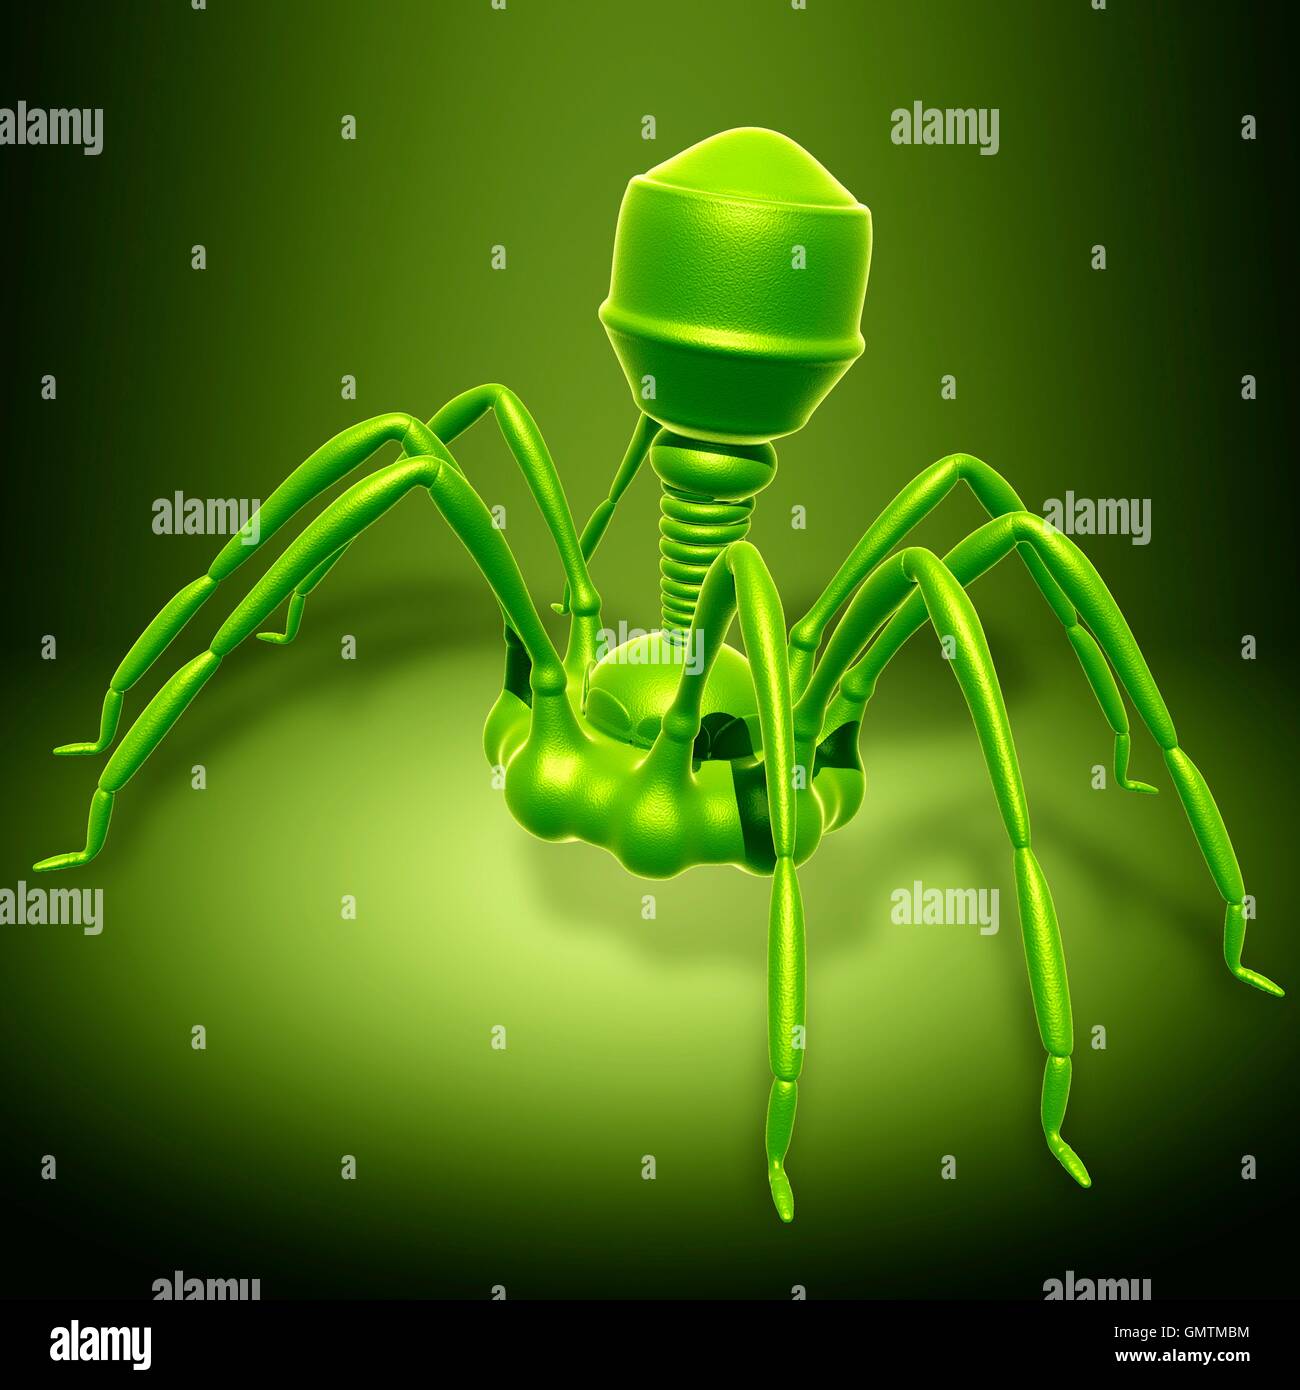 Illustration of a bacteriophage t4 virus. Stock Photo